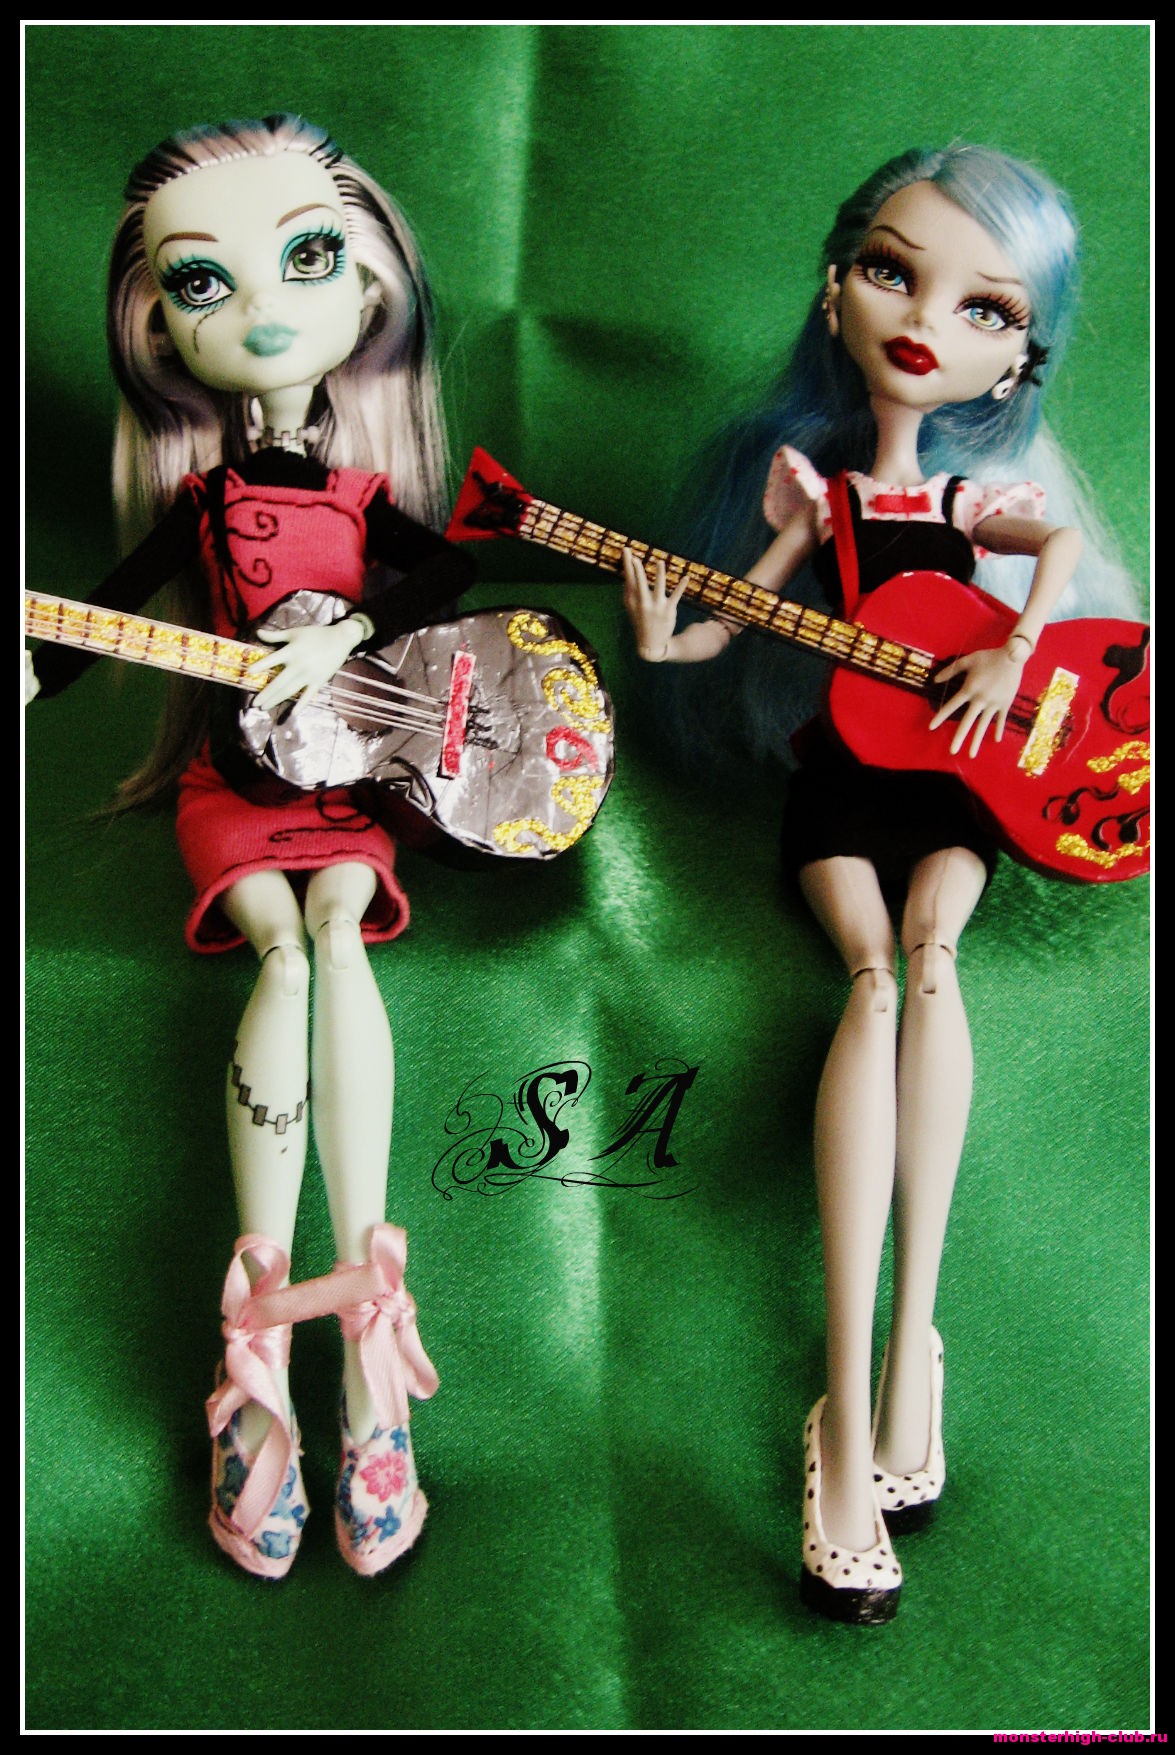 Куклы Monster High от Mattel — модные монстры